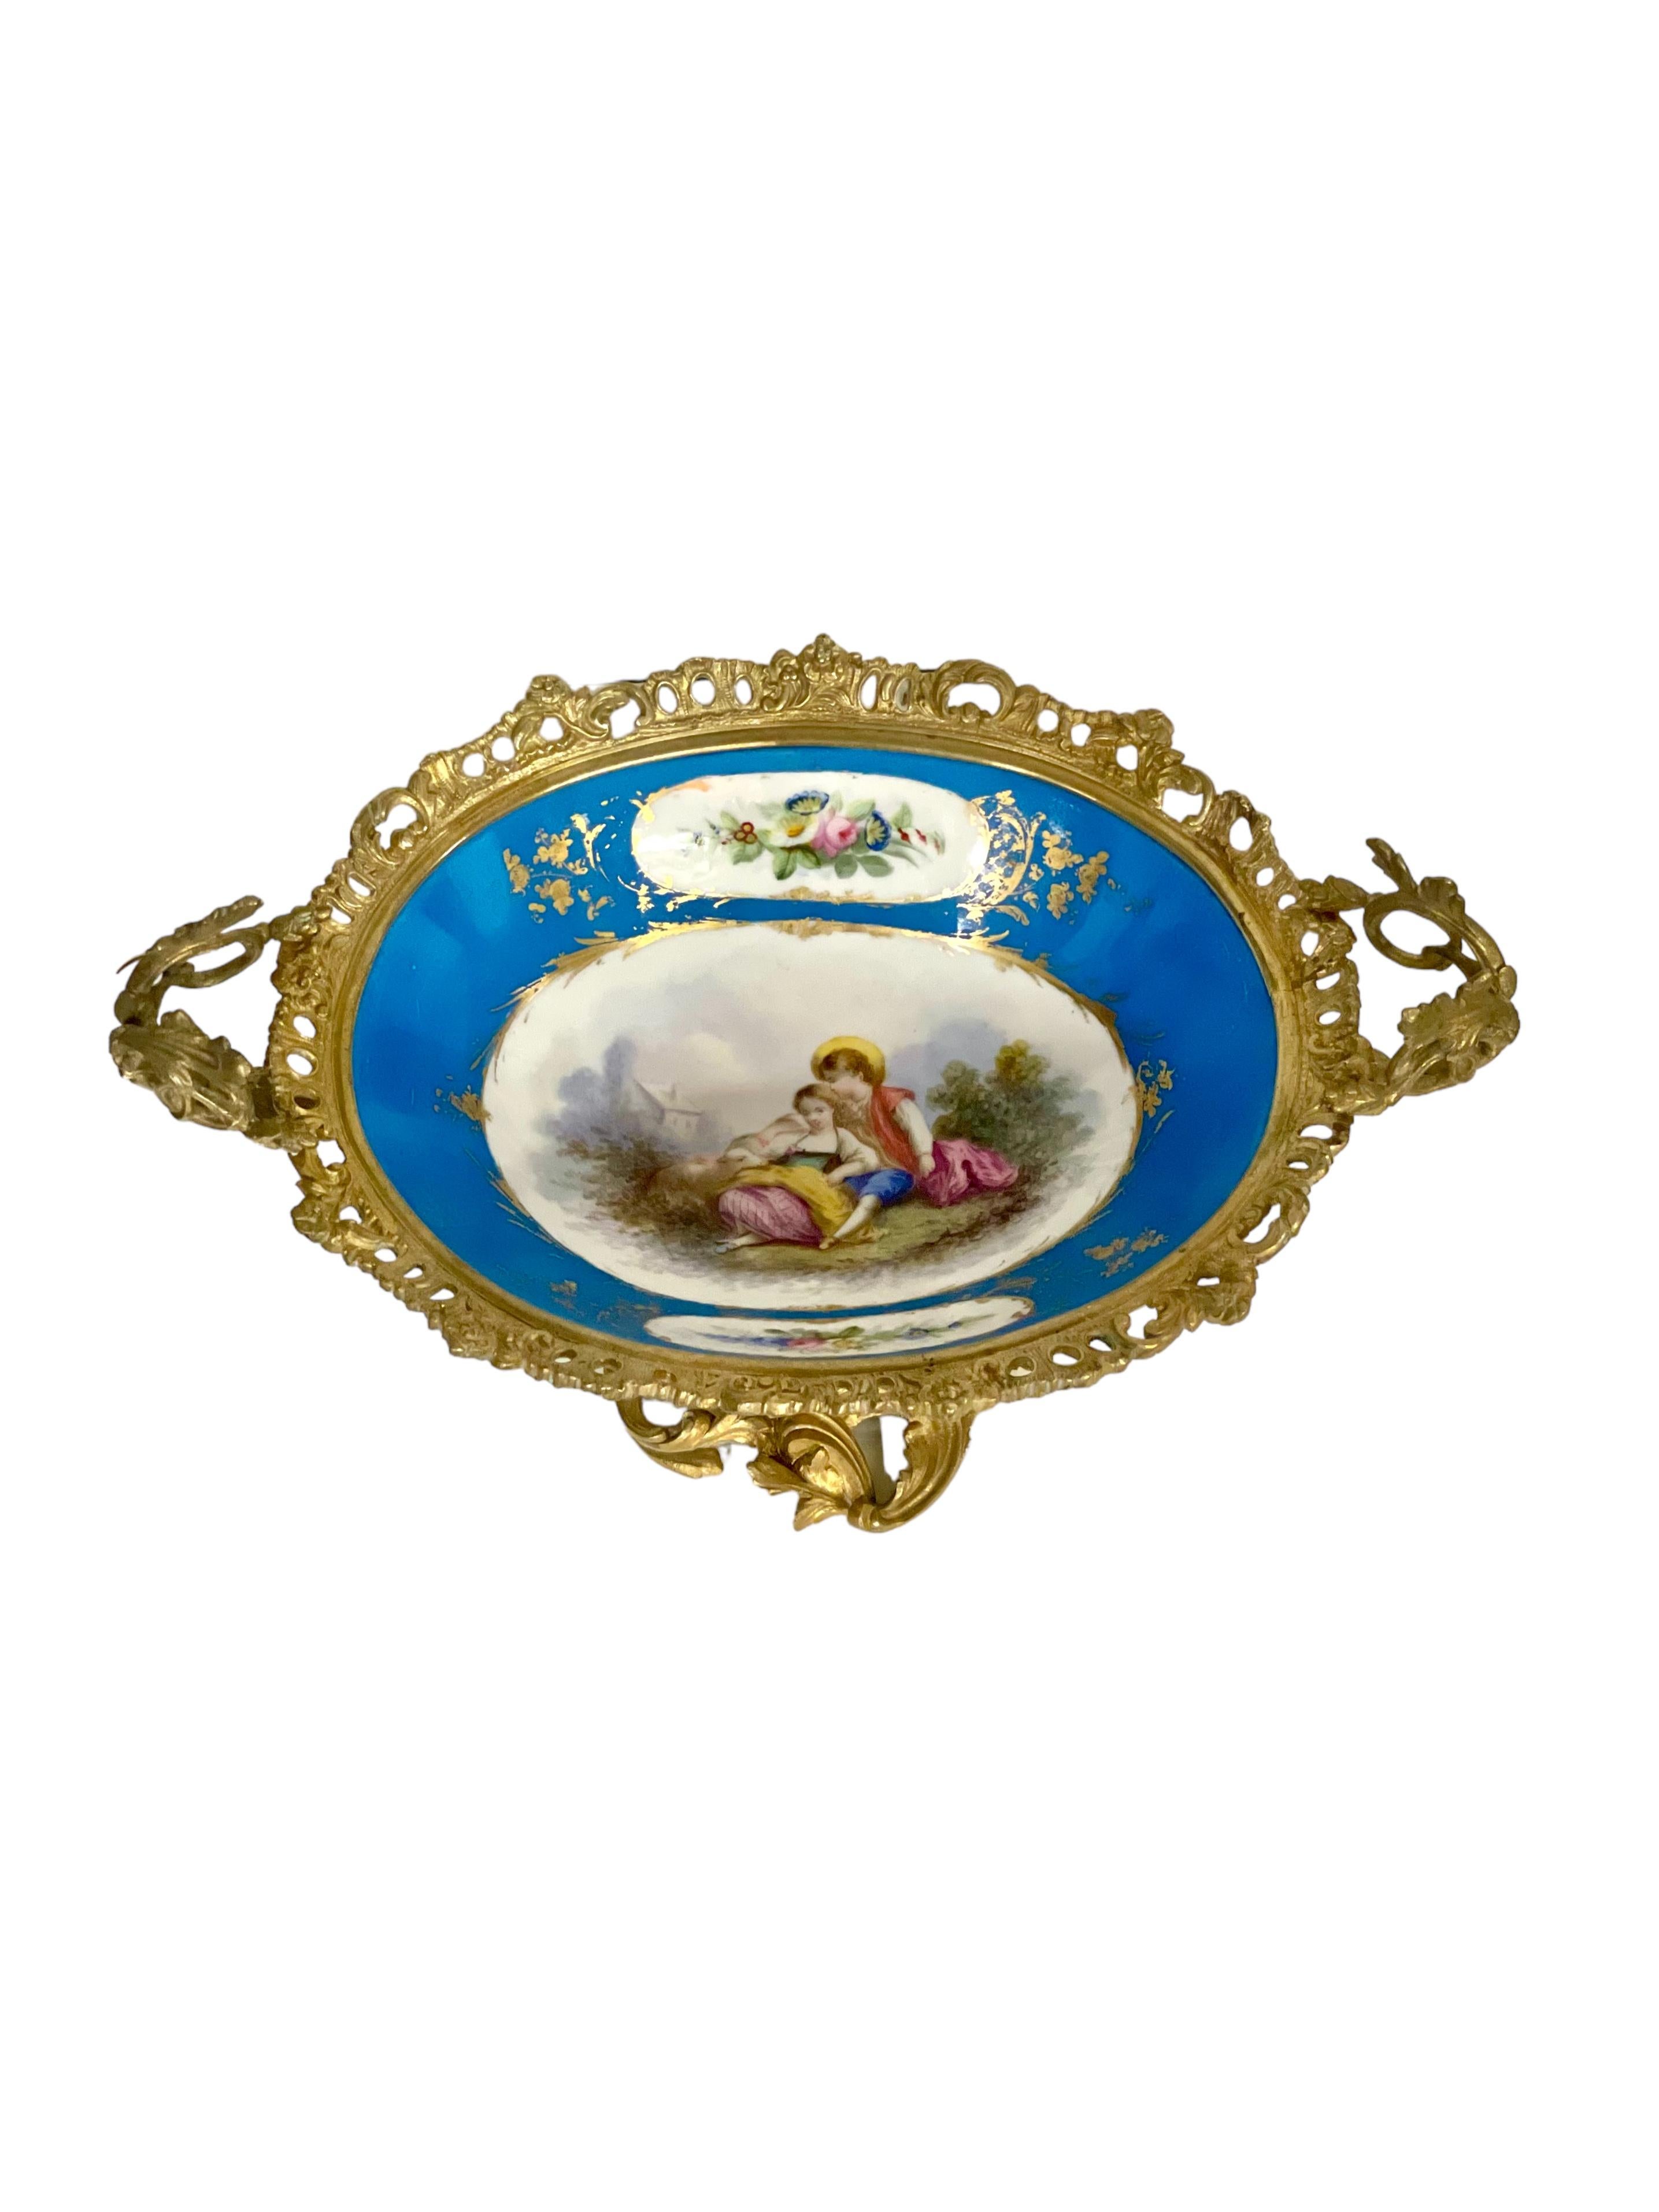 19th Century Napoleon III Sèvres Porcelain and Bronze Centerpiece For Sale 6